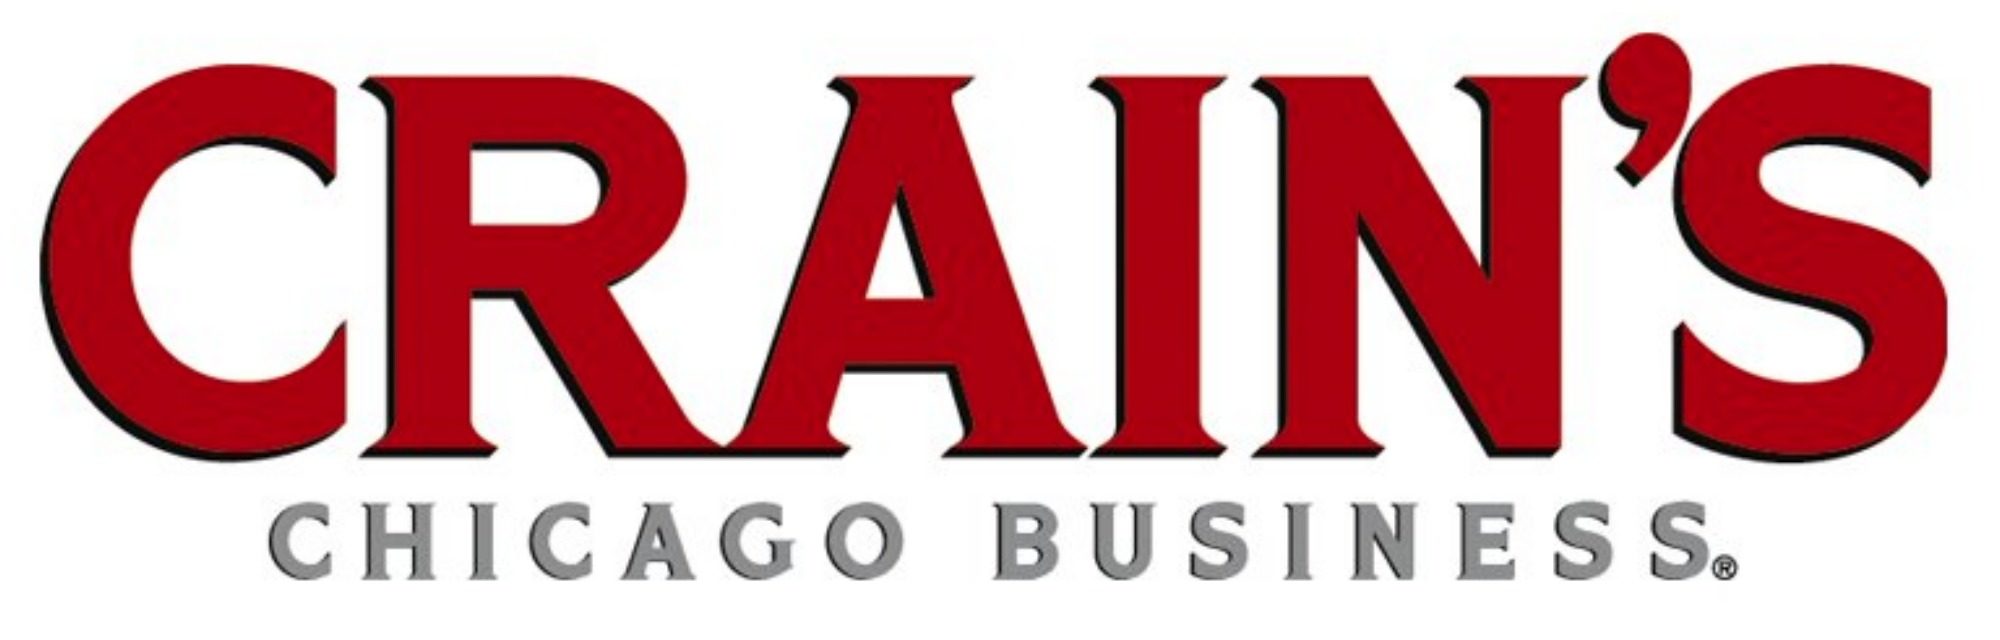 Crain's Chicago Business Logo